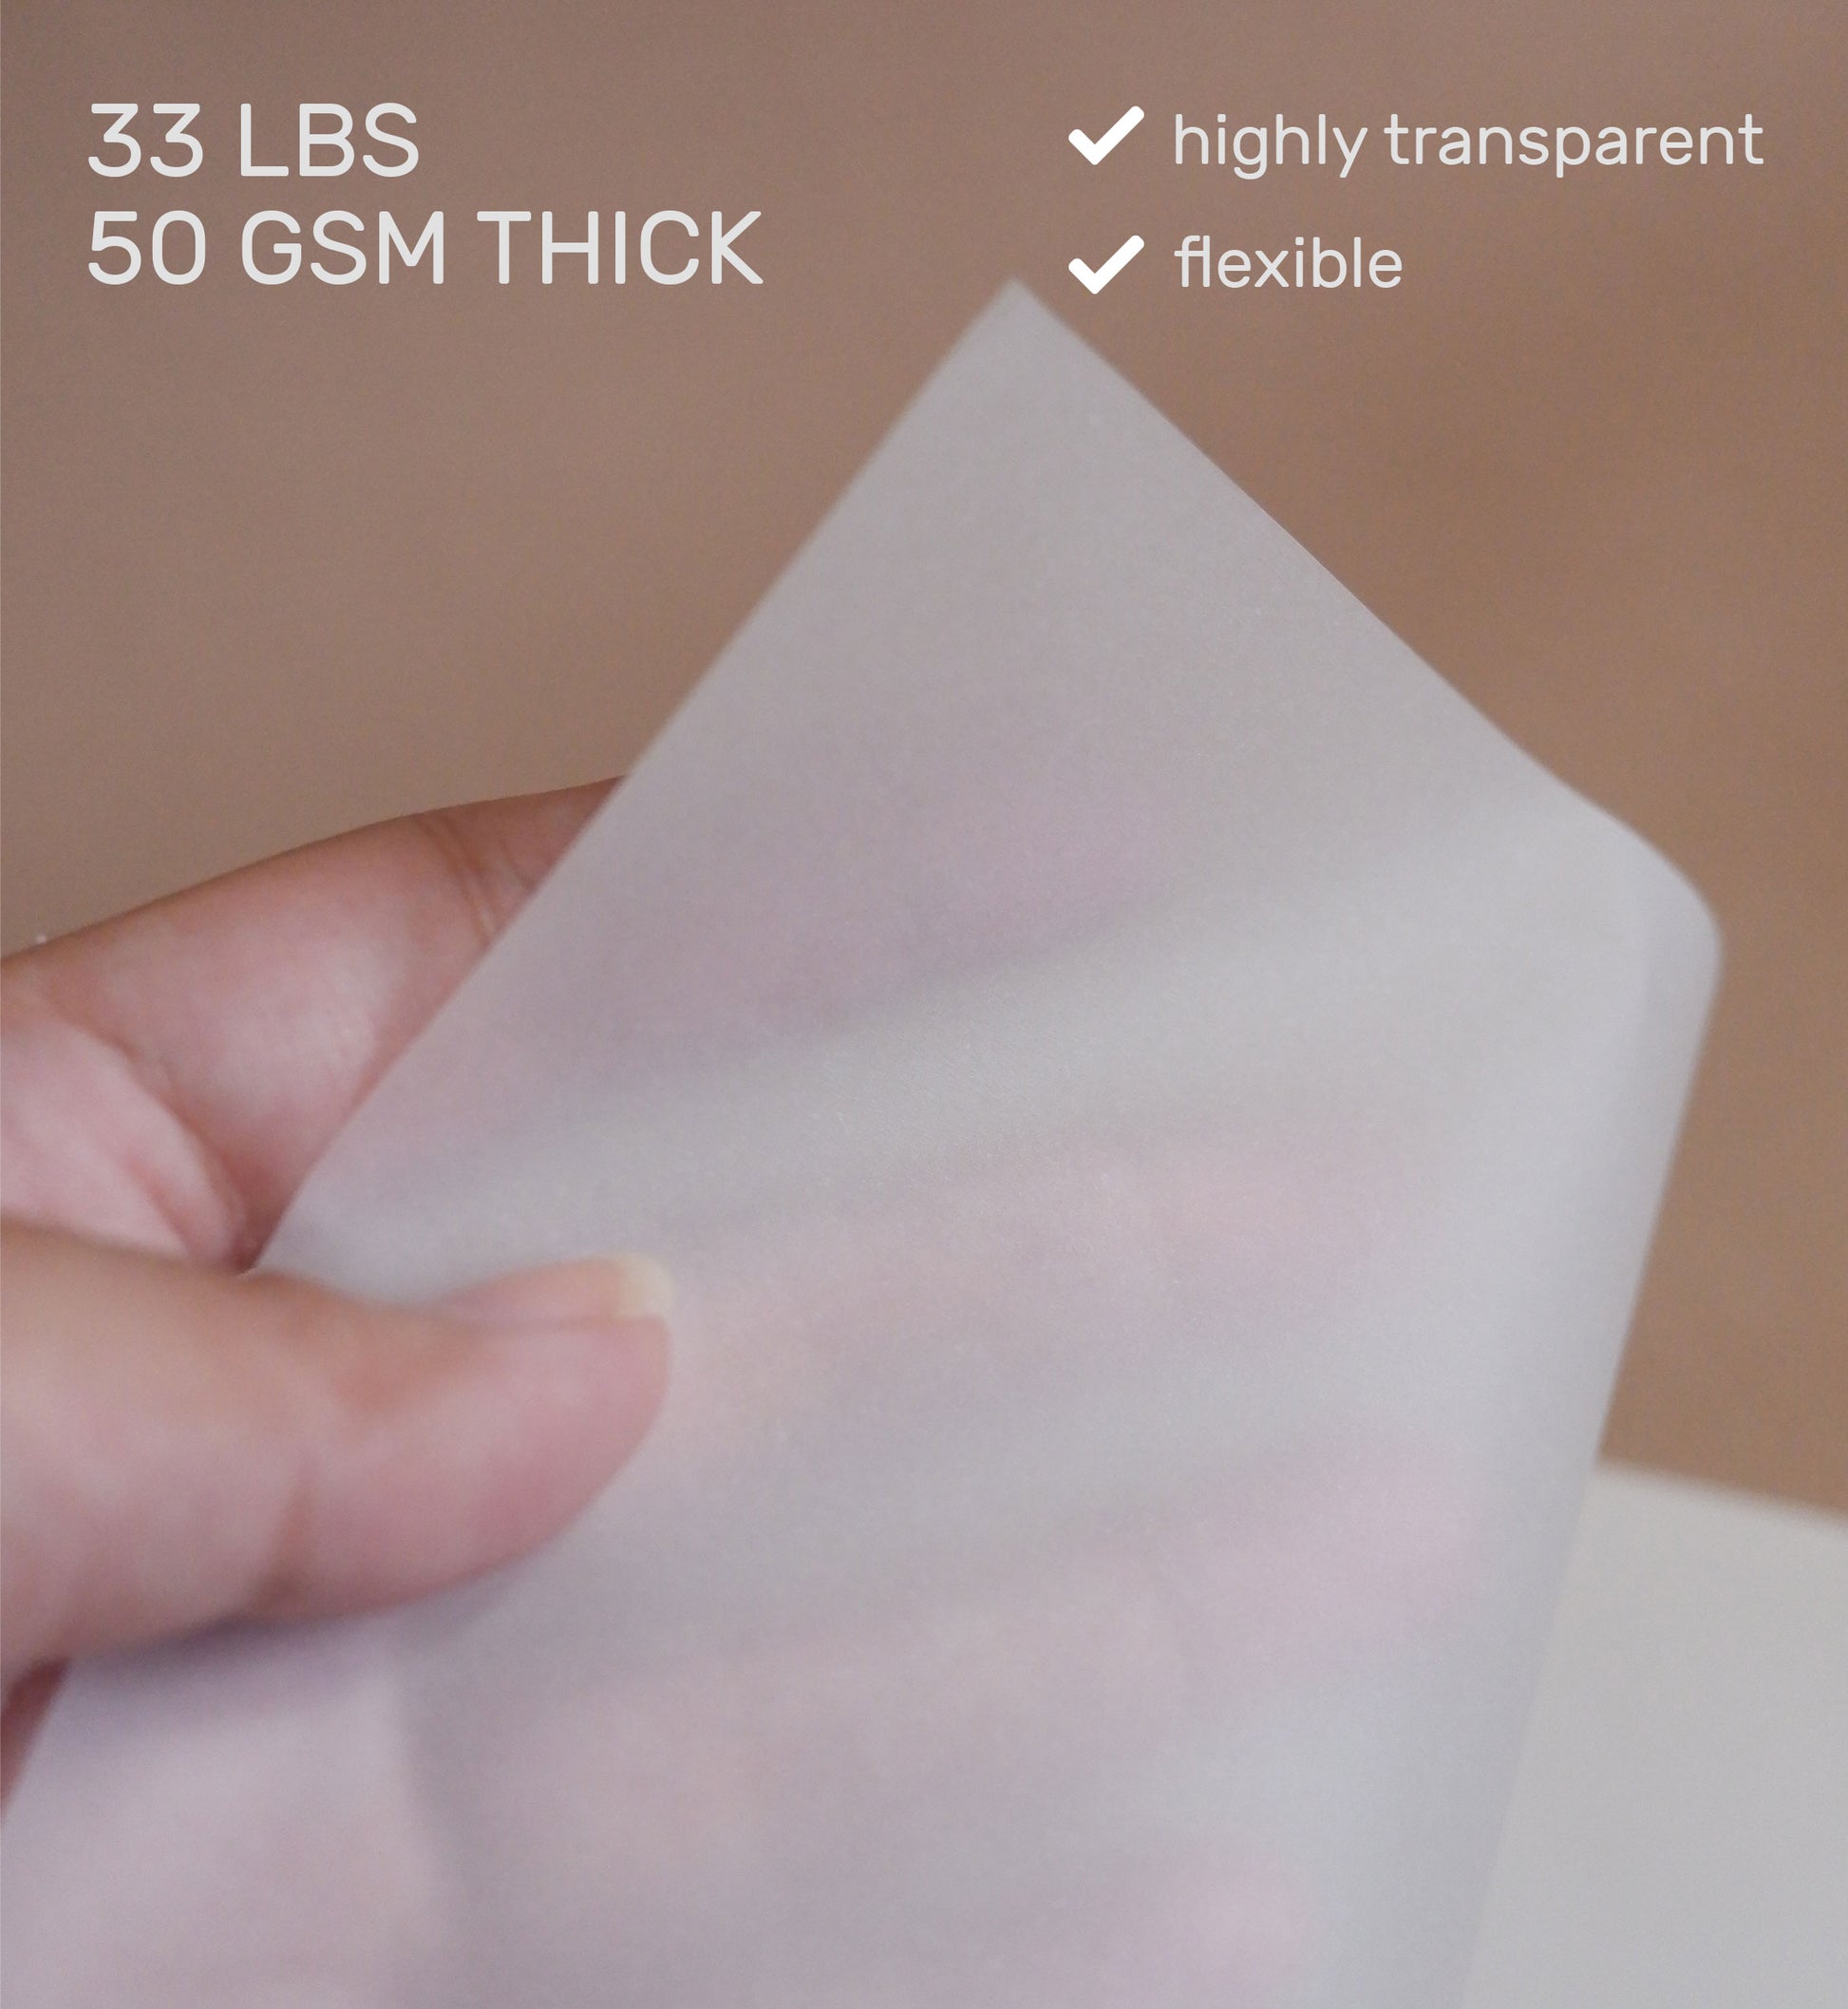  32 Sheets Copy Paper Translucent tracing Paper